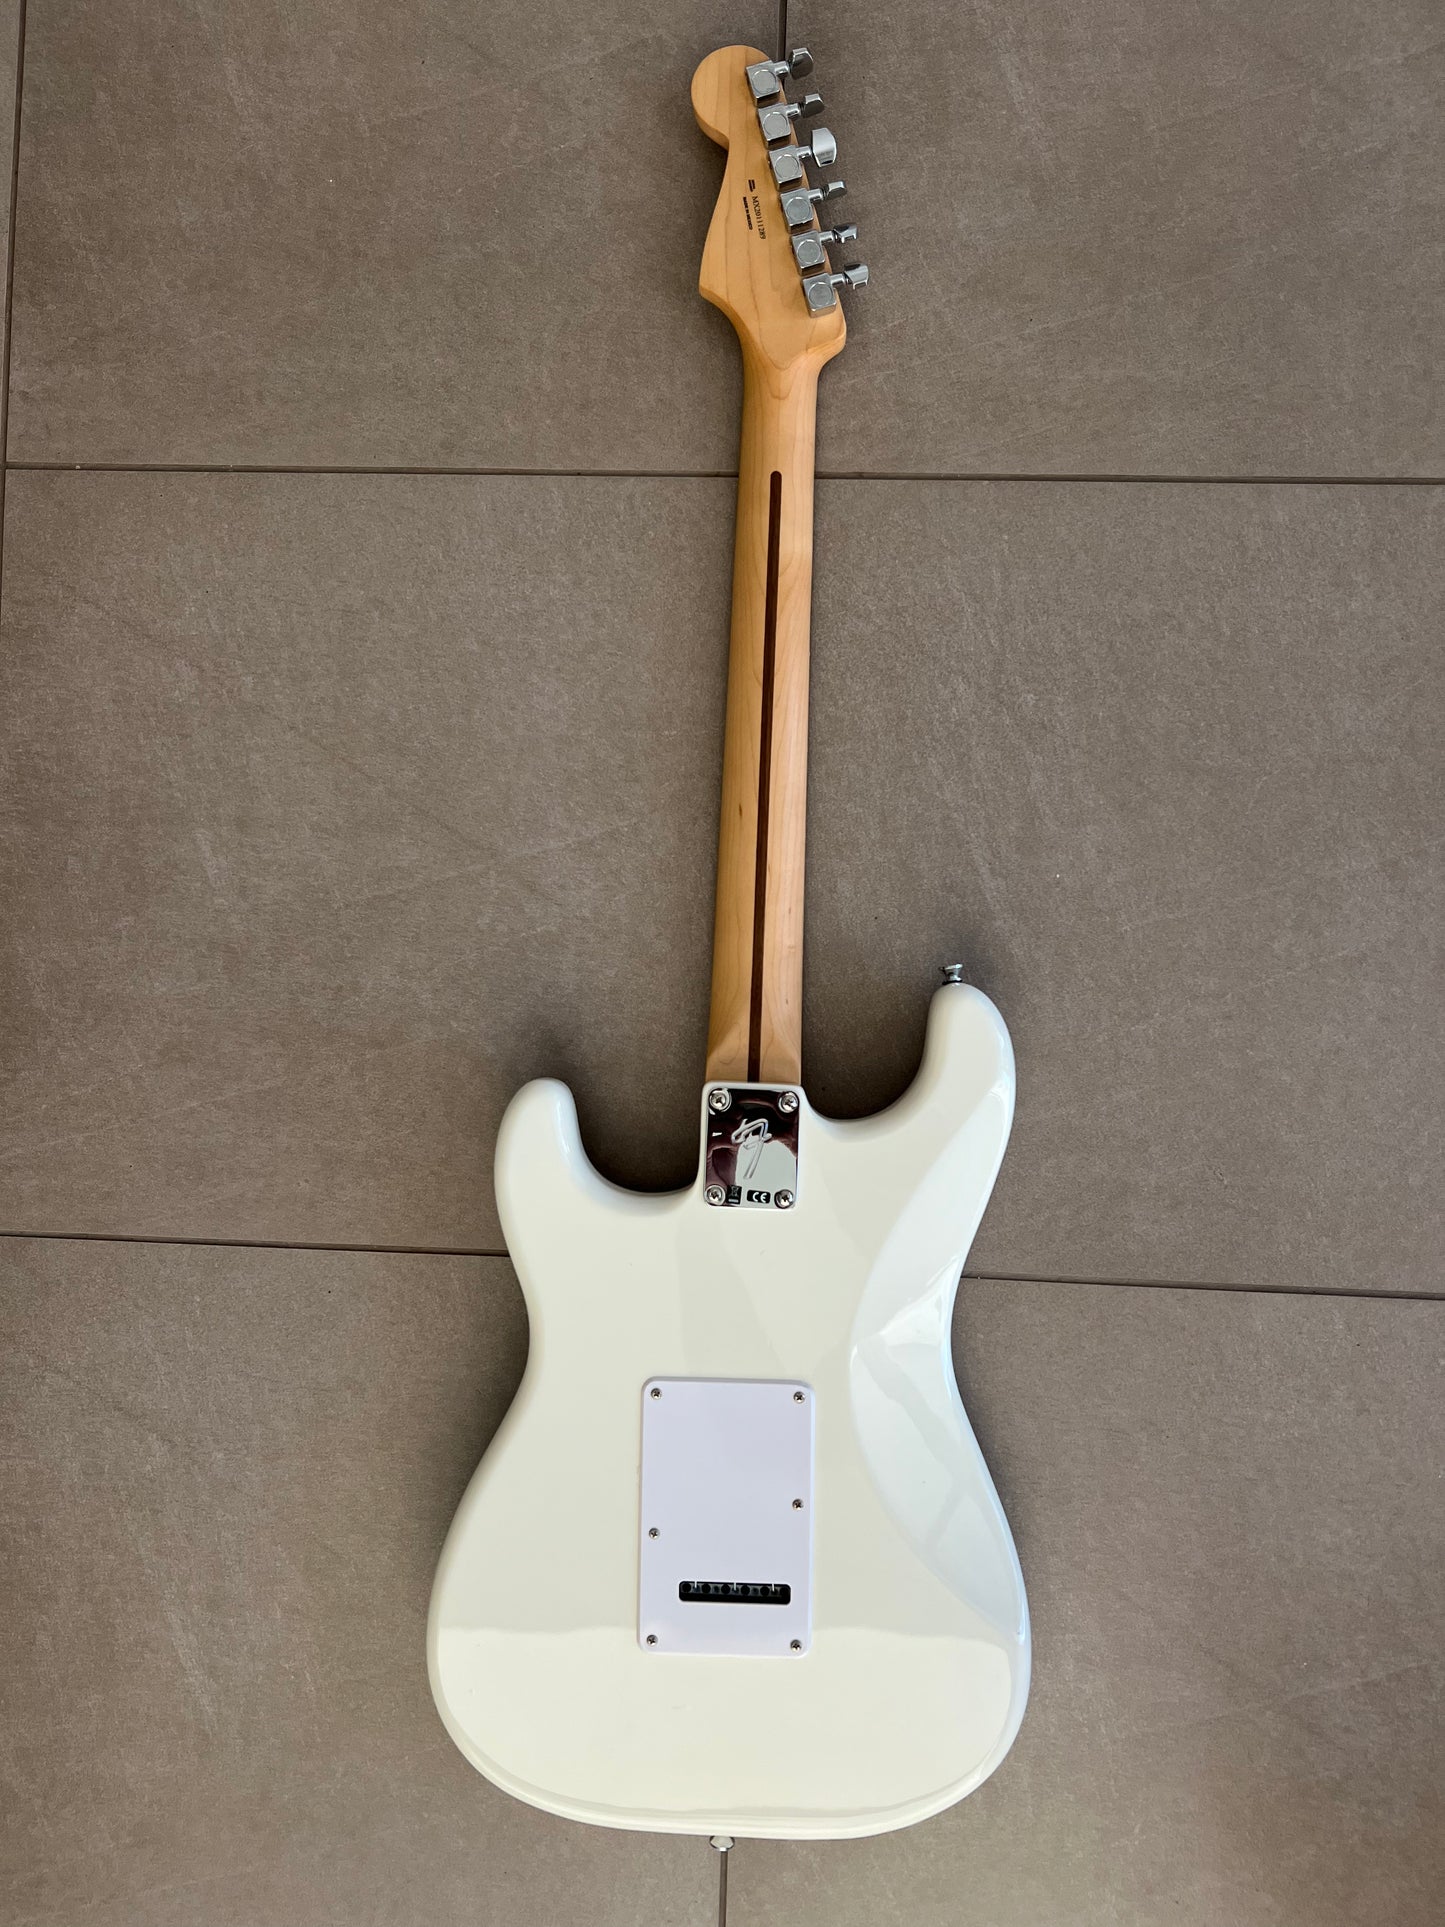 Fender Stratocaster Player Electric Guitar MIM 2020